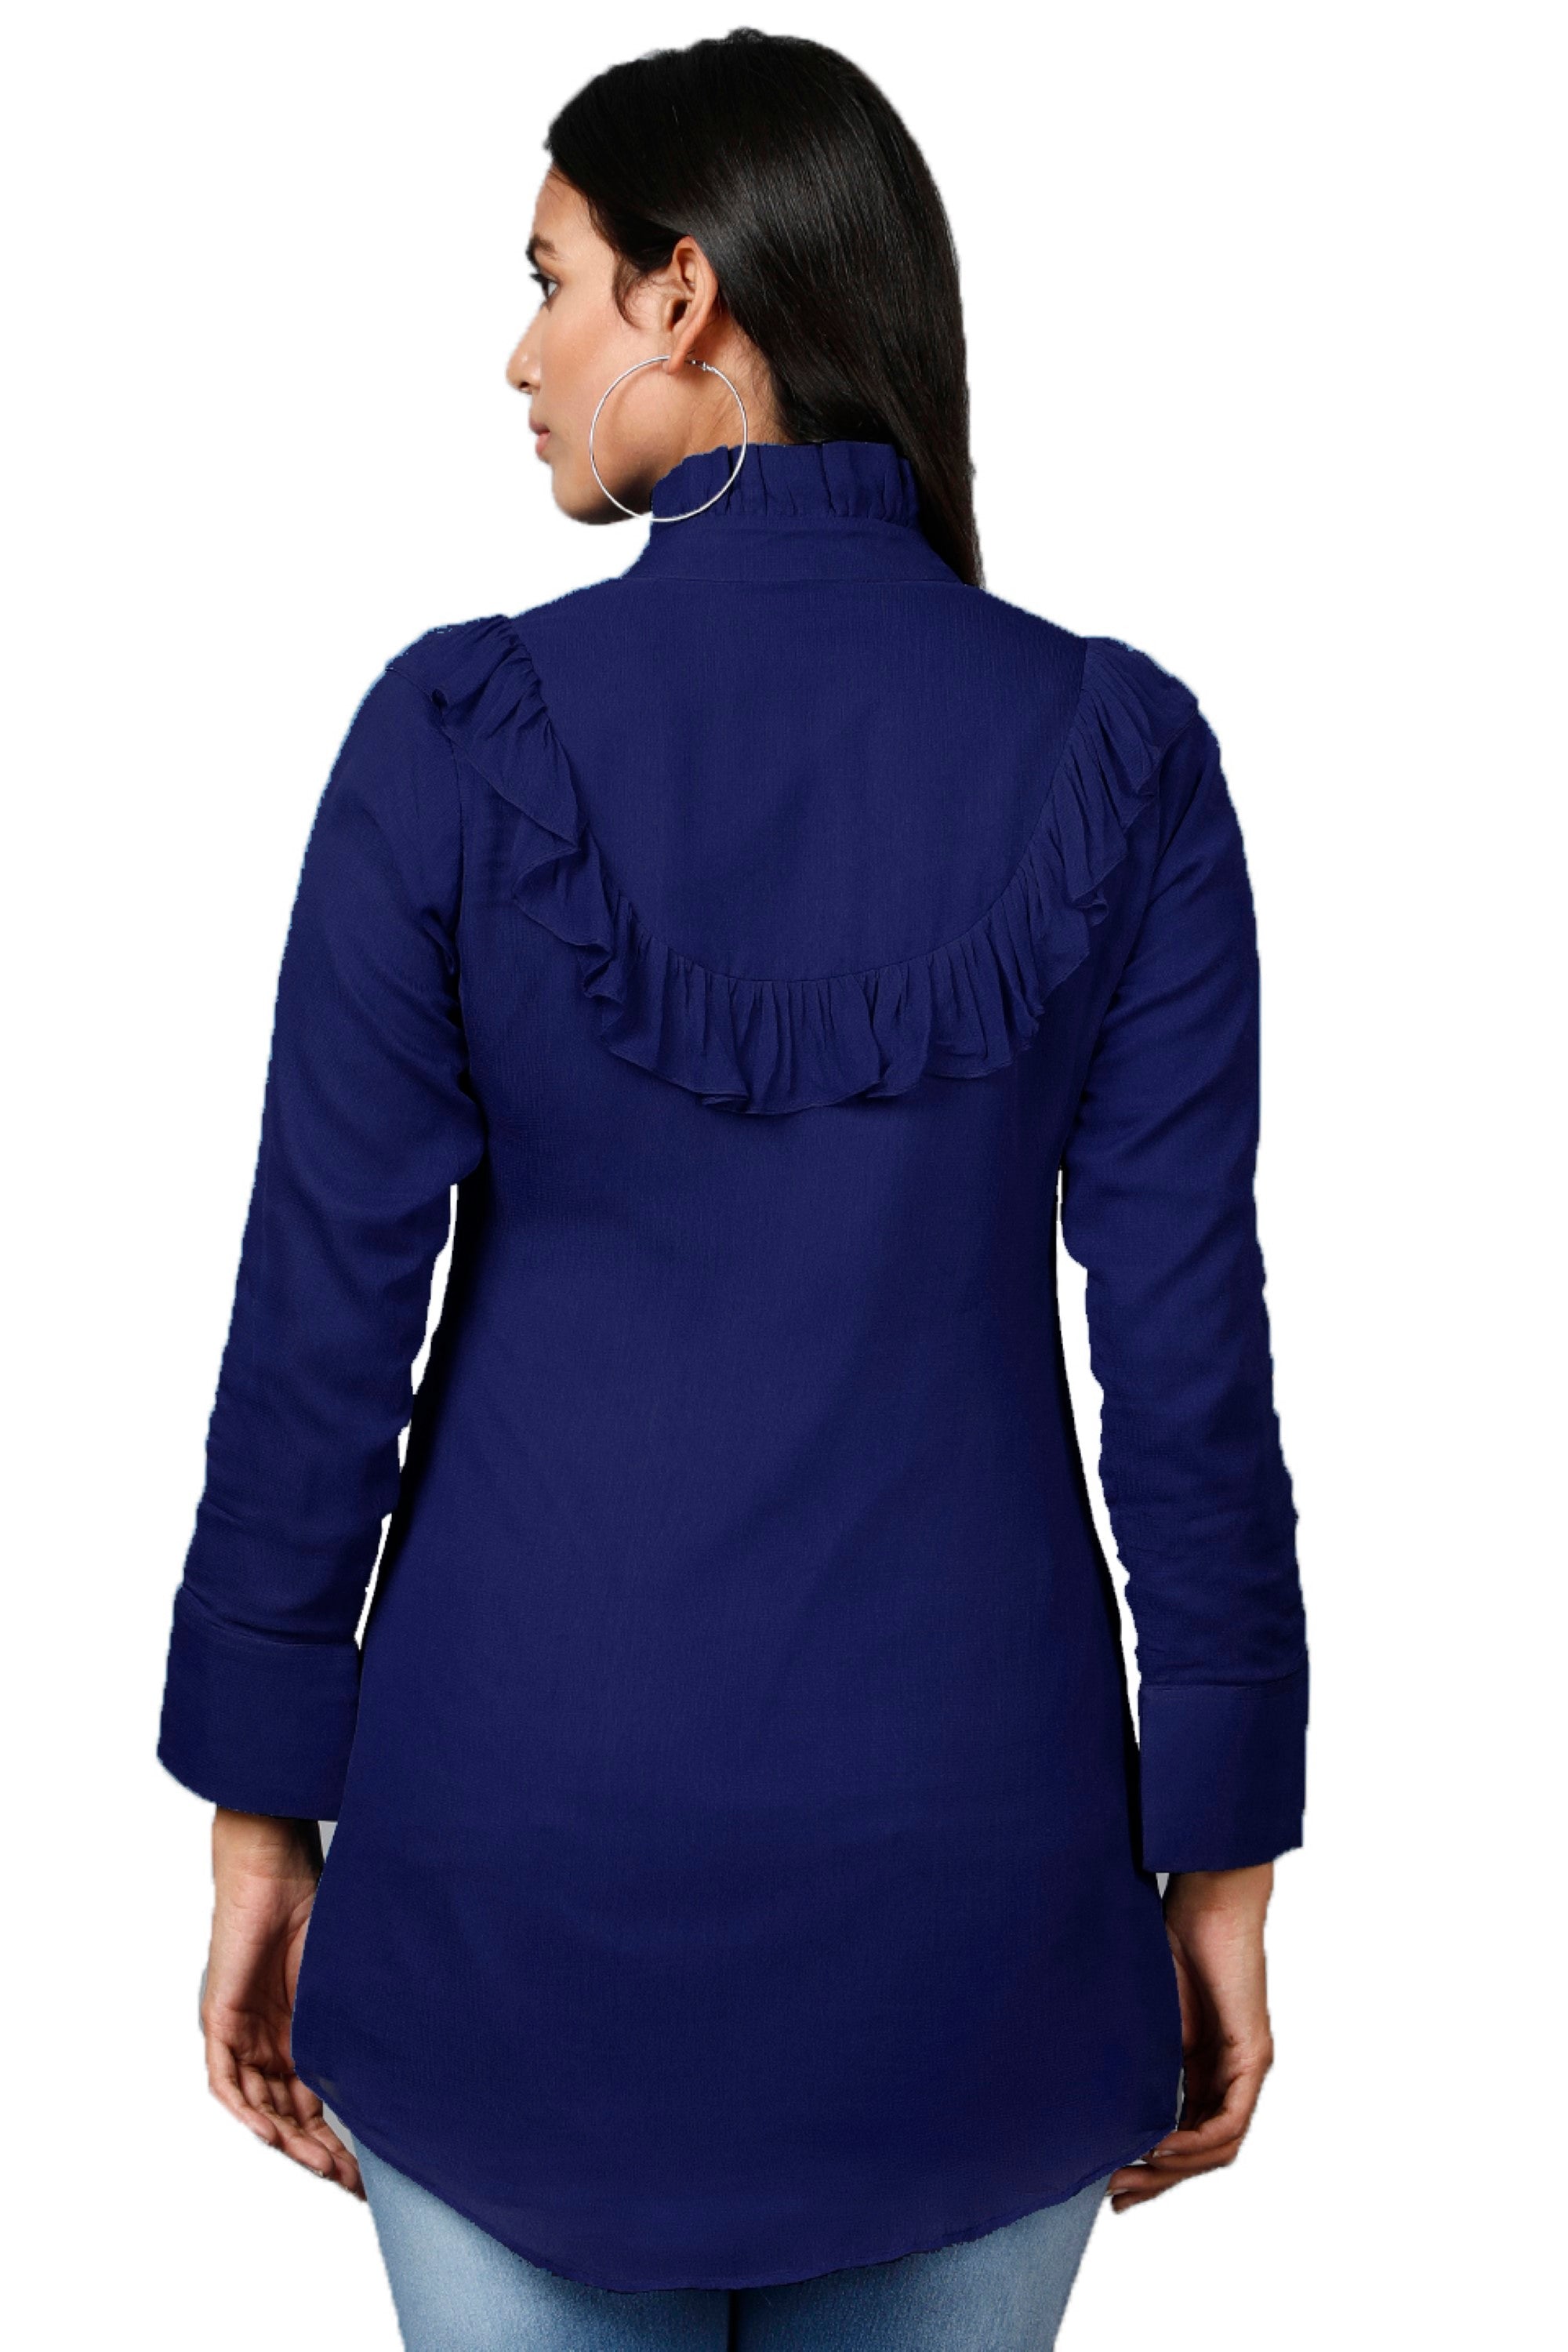 Women's Dark Blue Shirt With Ruffle Yoke And Cuff - MIRACOLOS by Ruchi